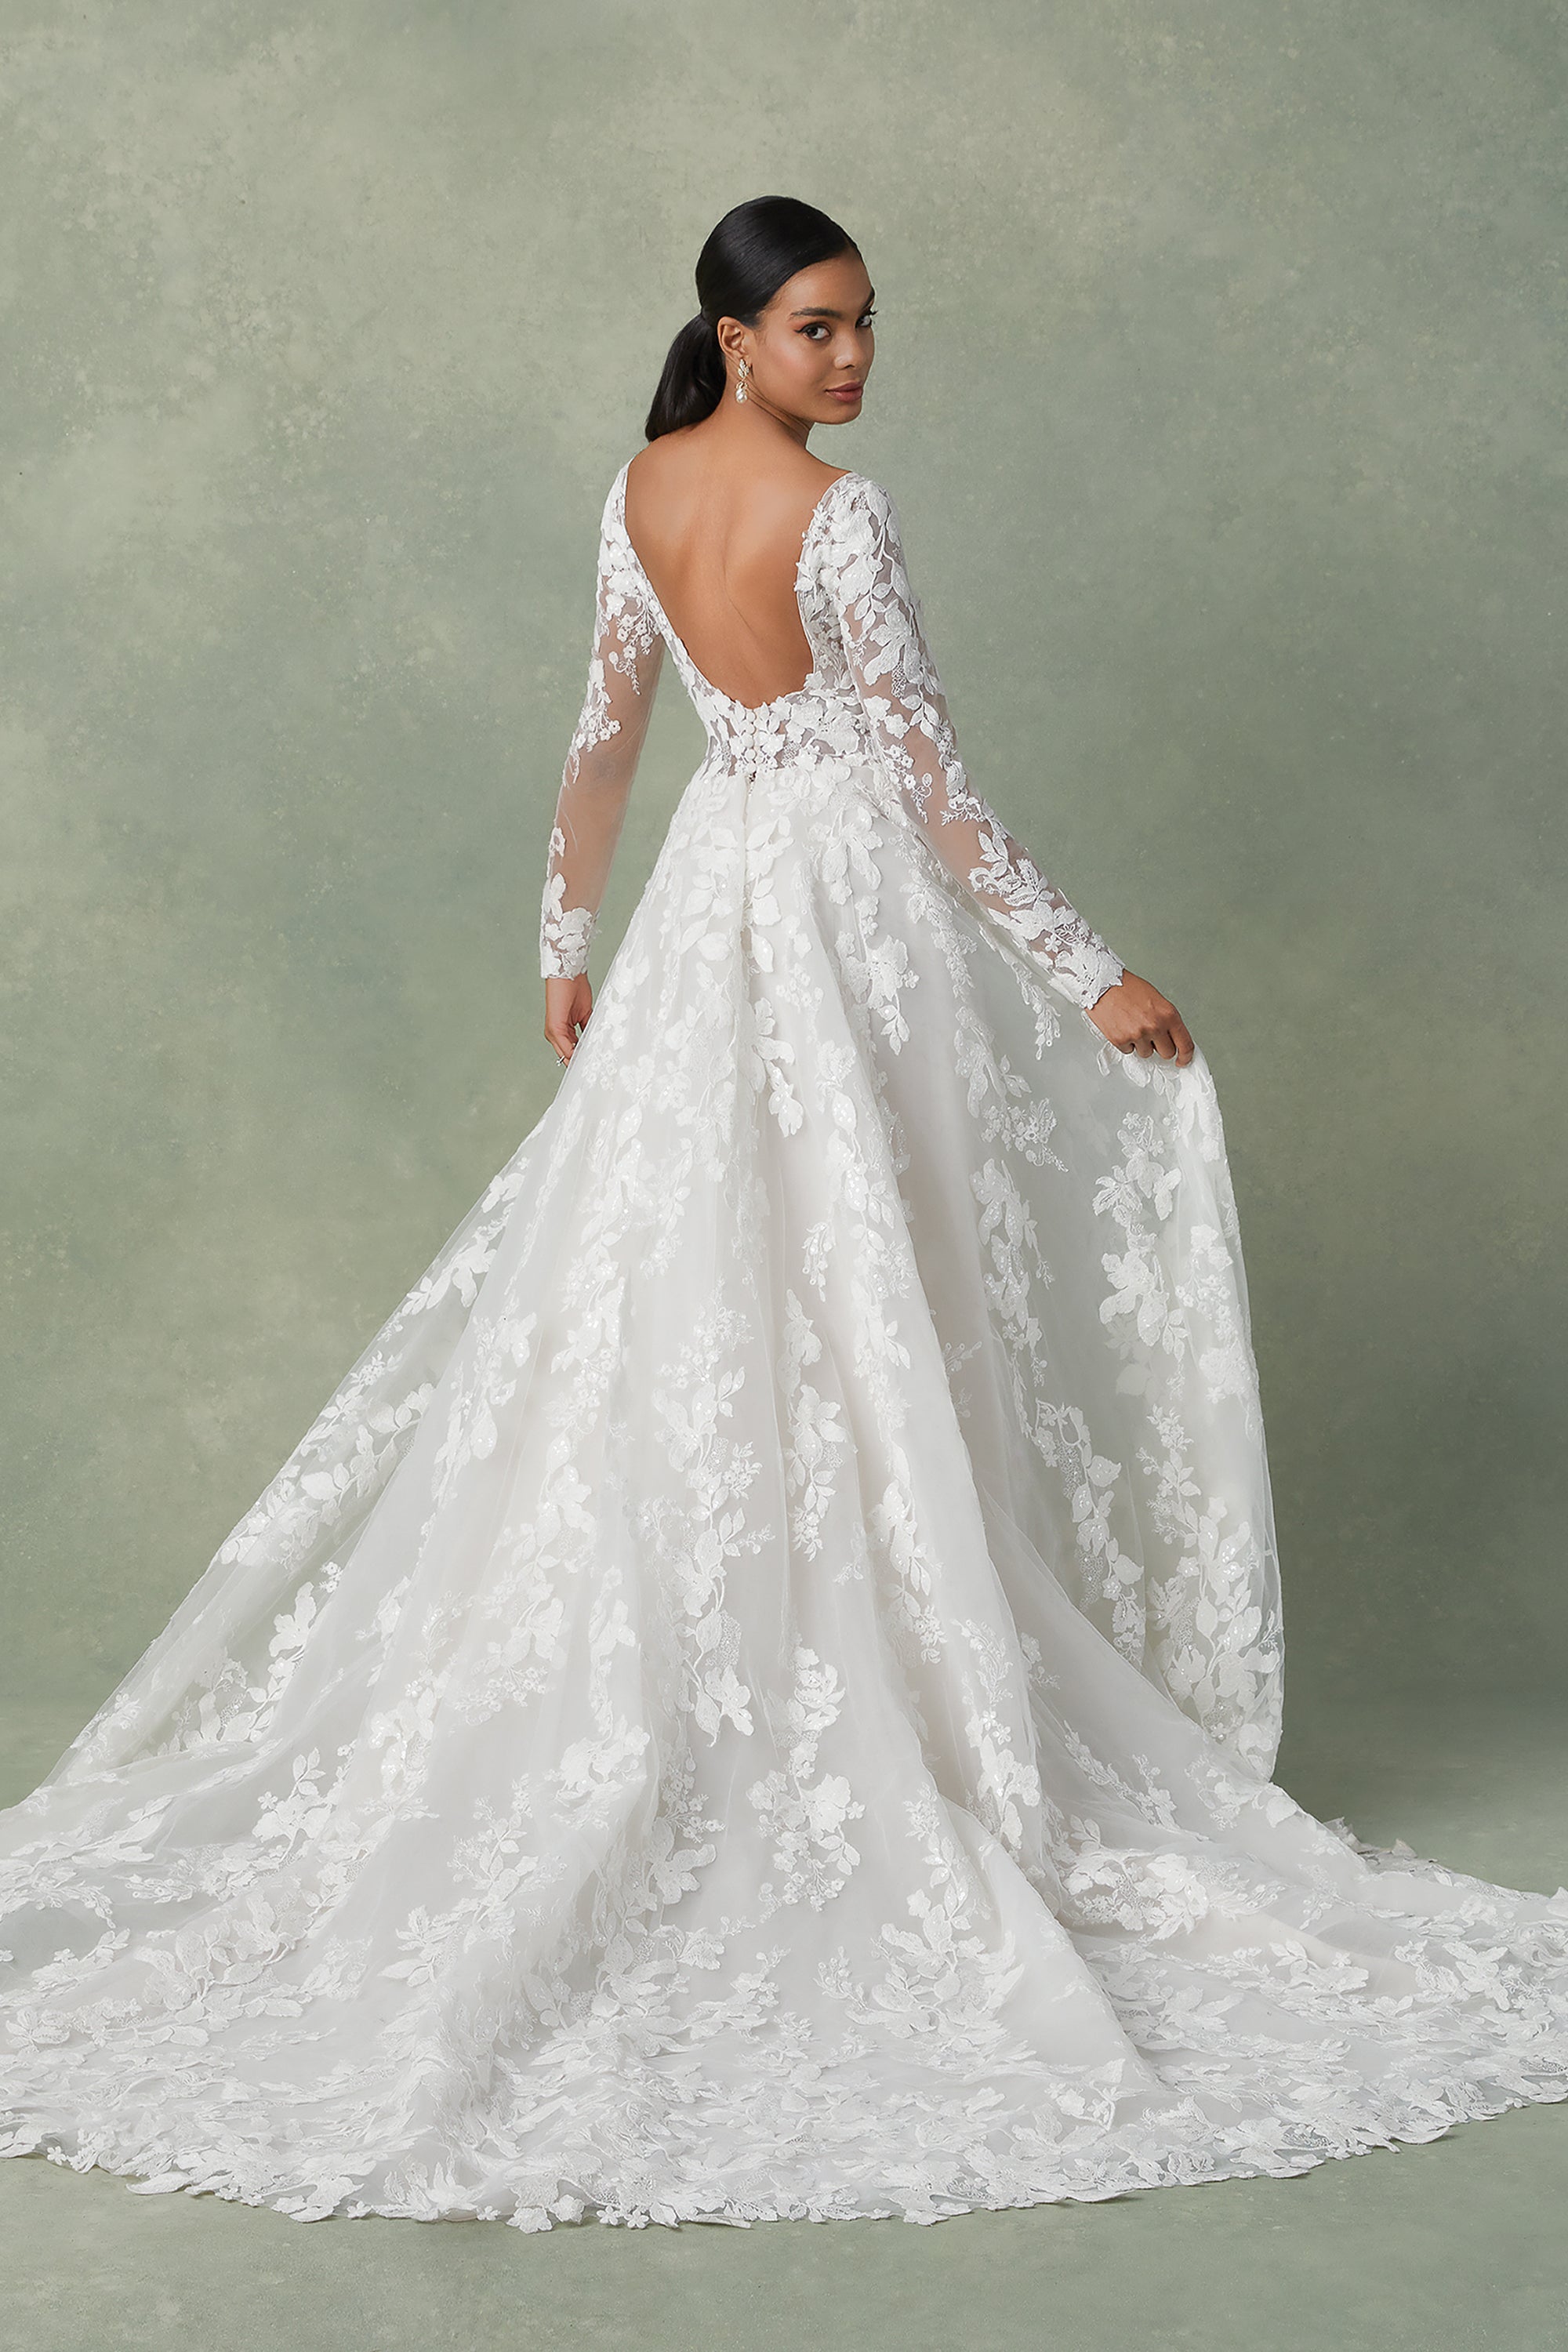 Allison * sample size 14 - high end lace wedding dress with plunging V back